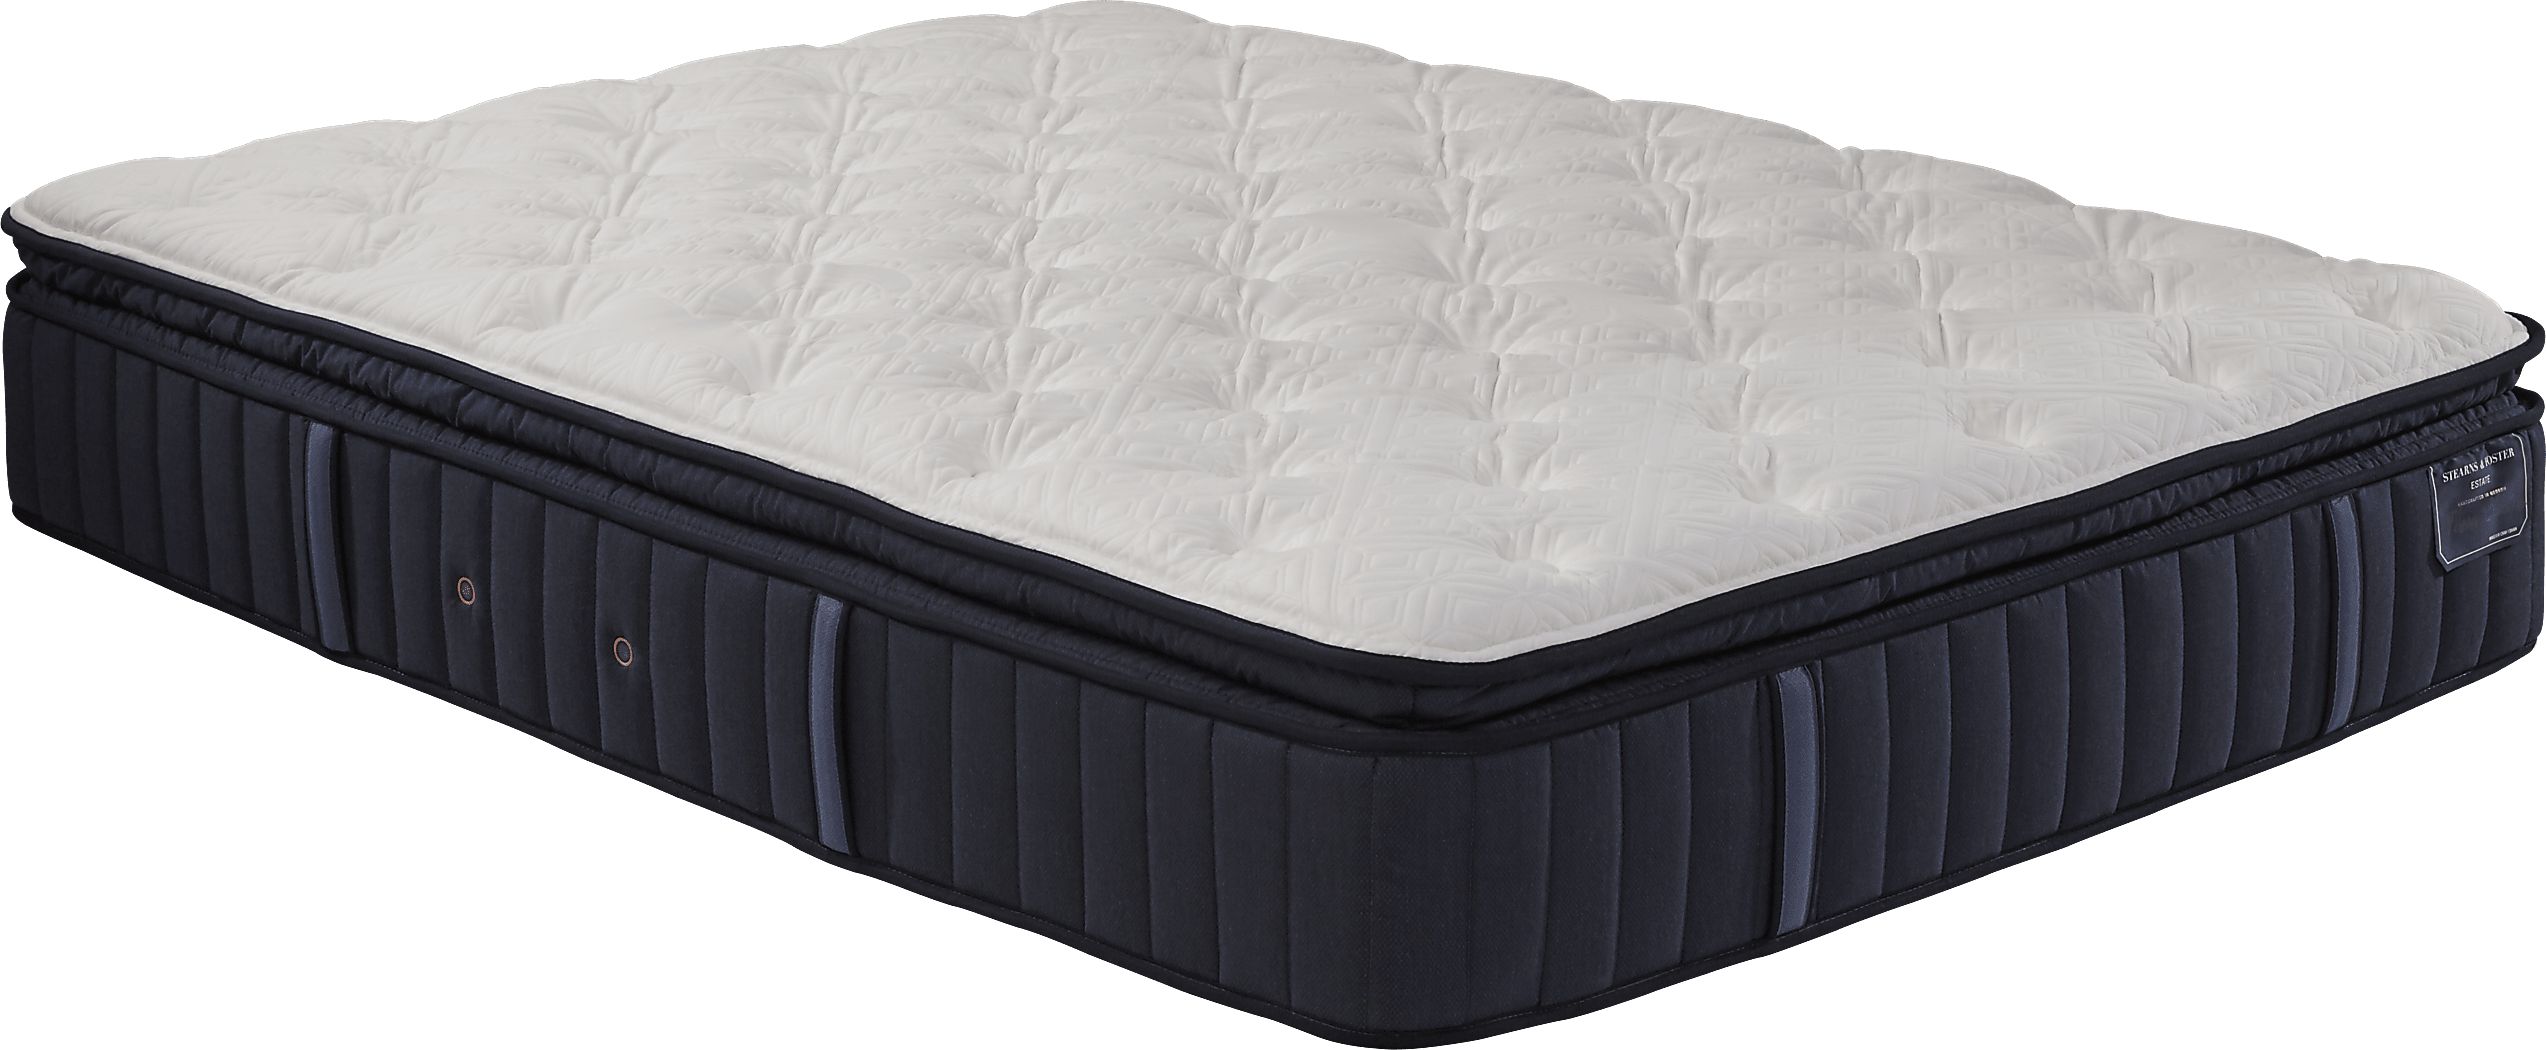 plush euro pillowtop king mattress